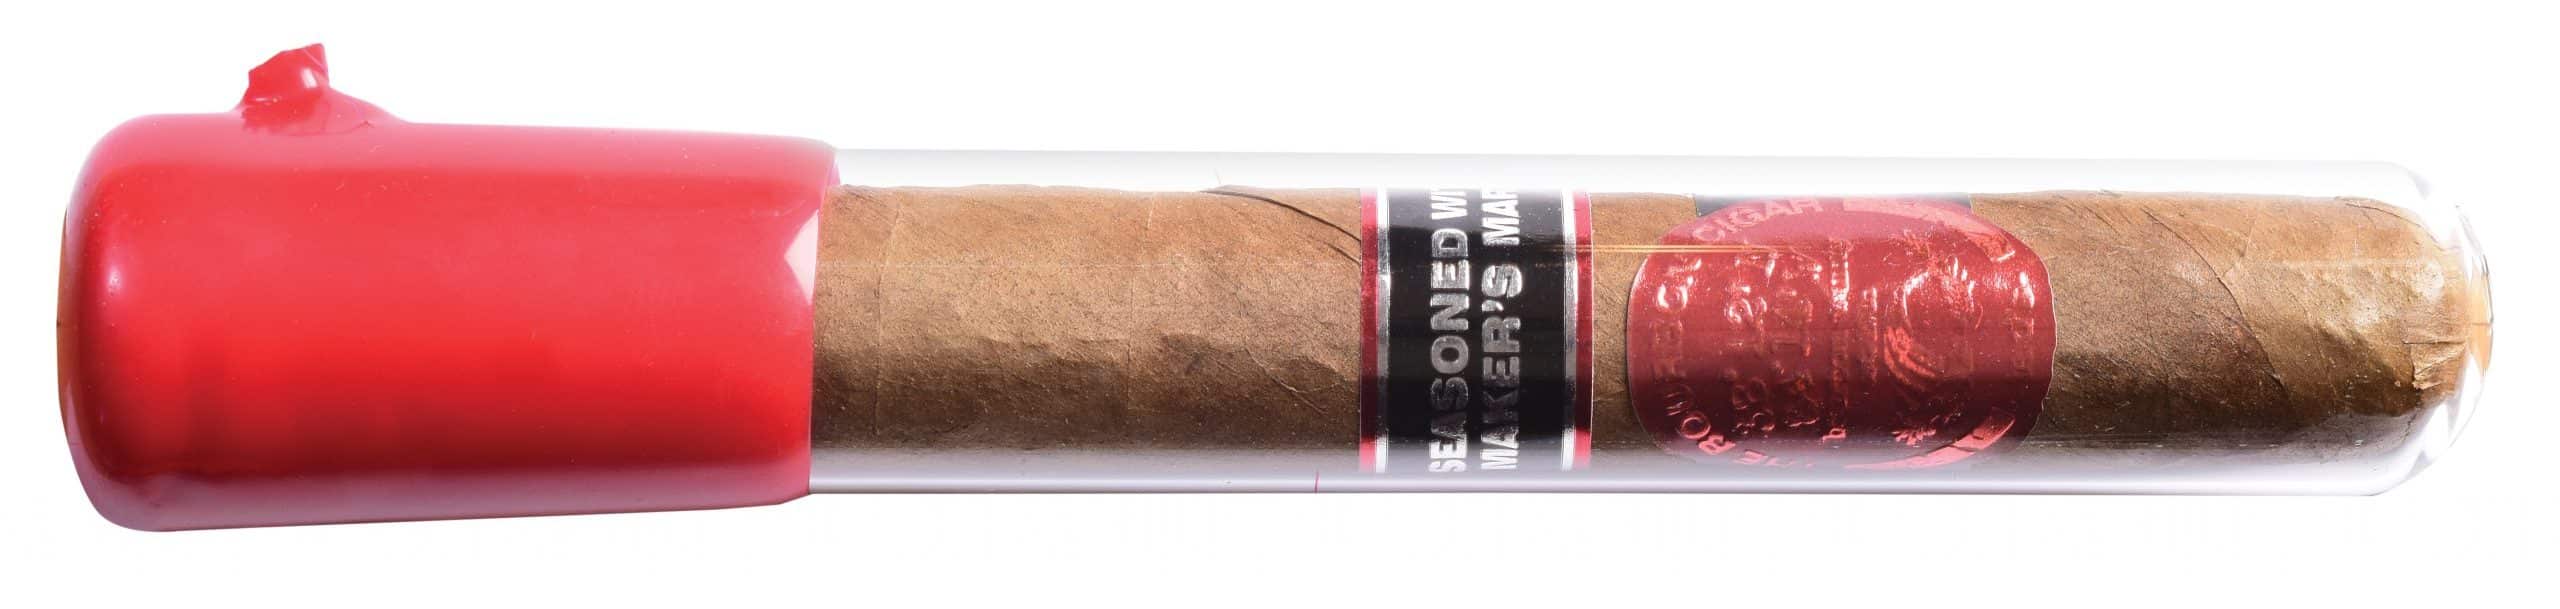 makers mark cigar tube sealed